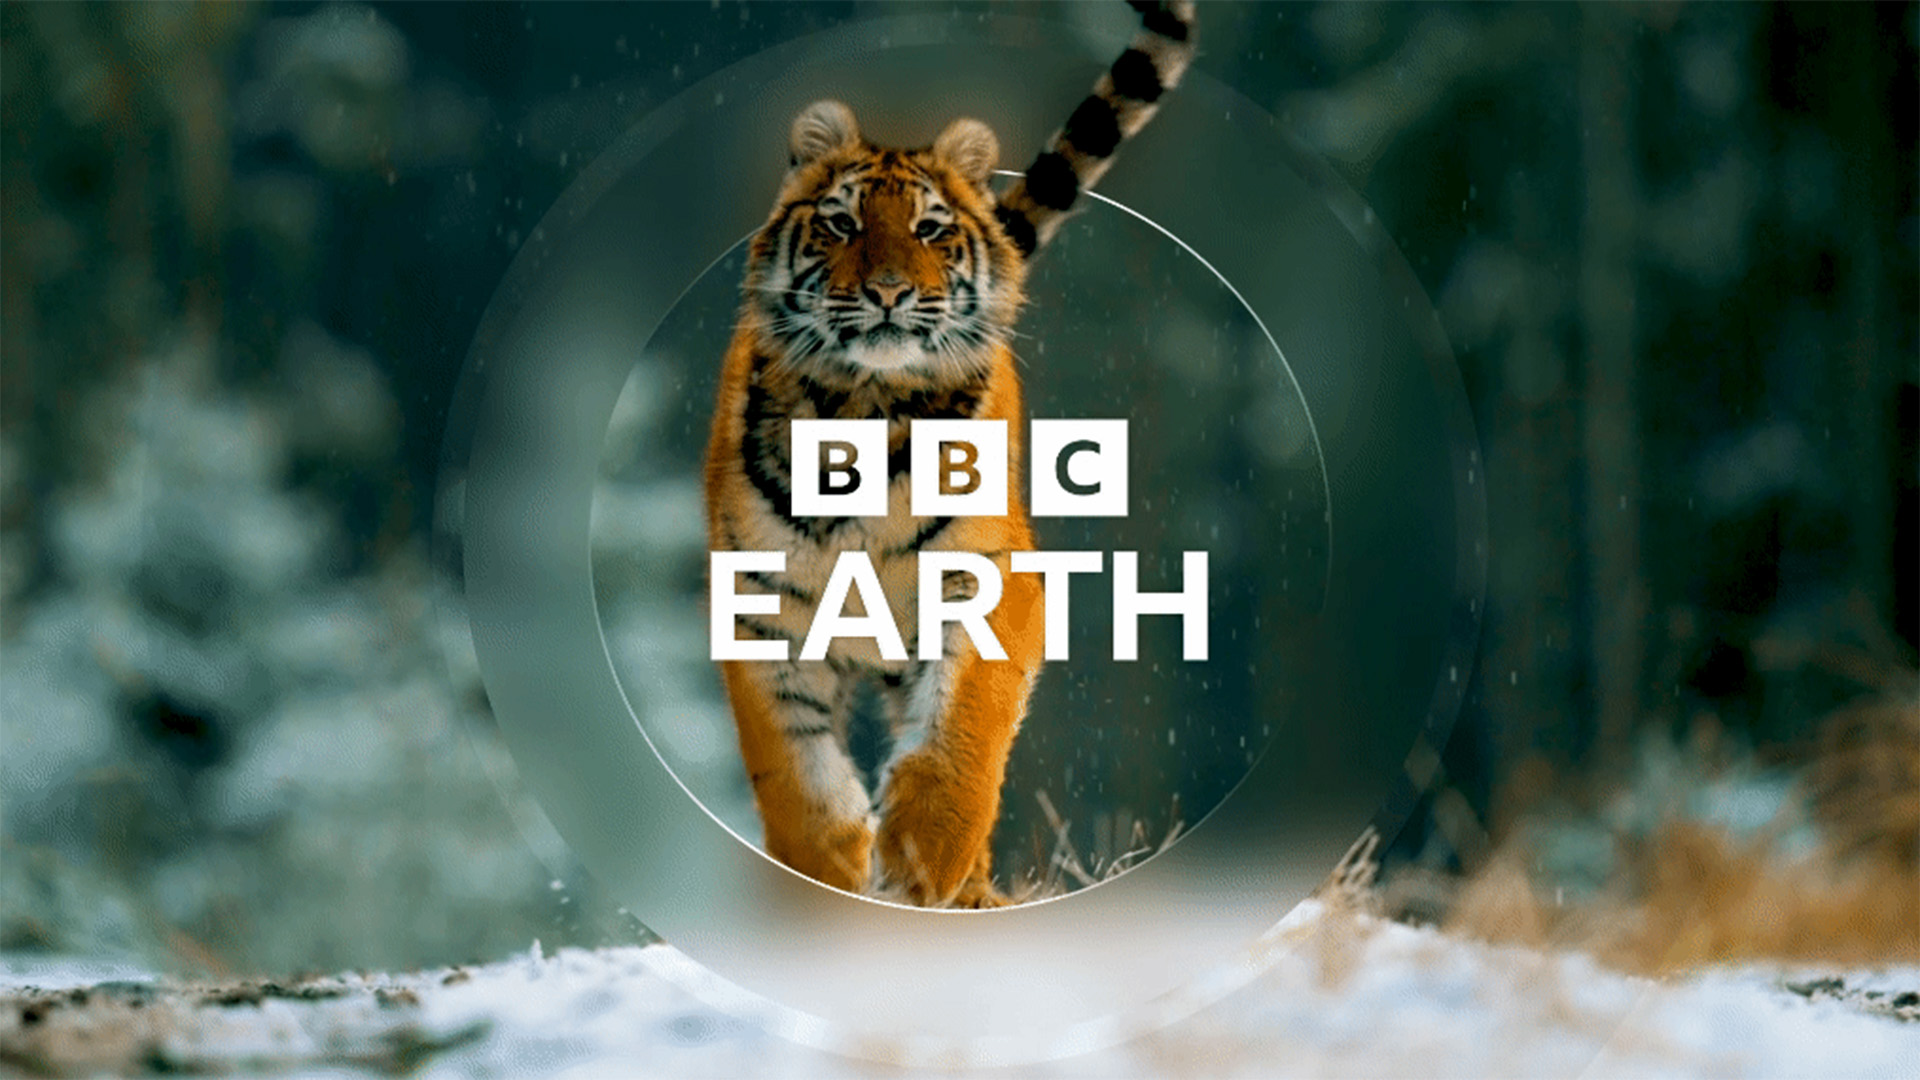 BBC Earth logo featuring a running tiger framed in a circular lens